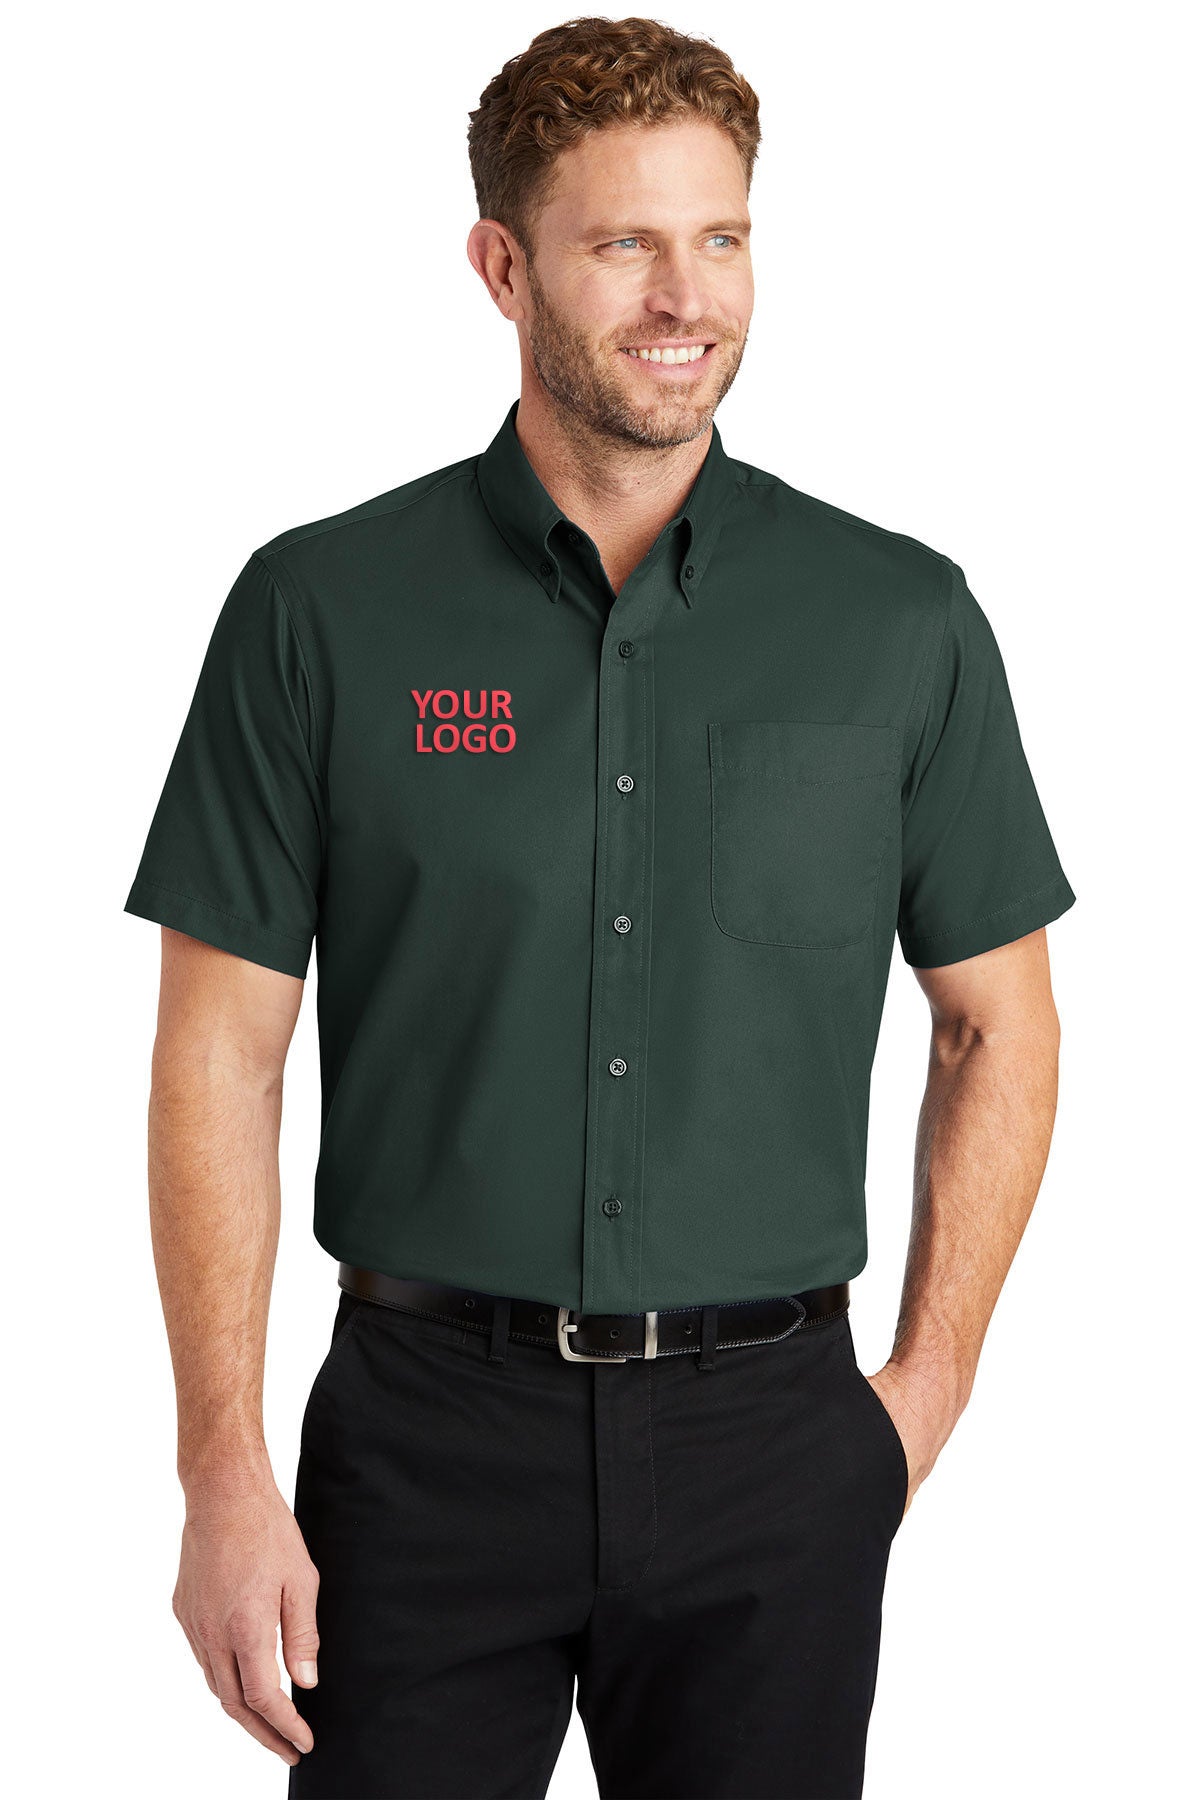 CornerStone Dark Green SP18 work shirts with logo